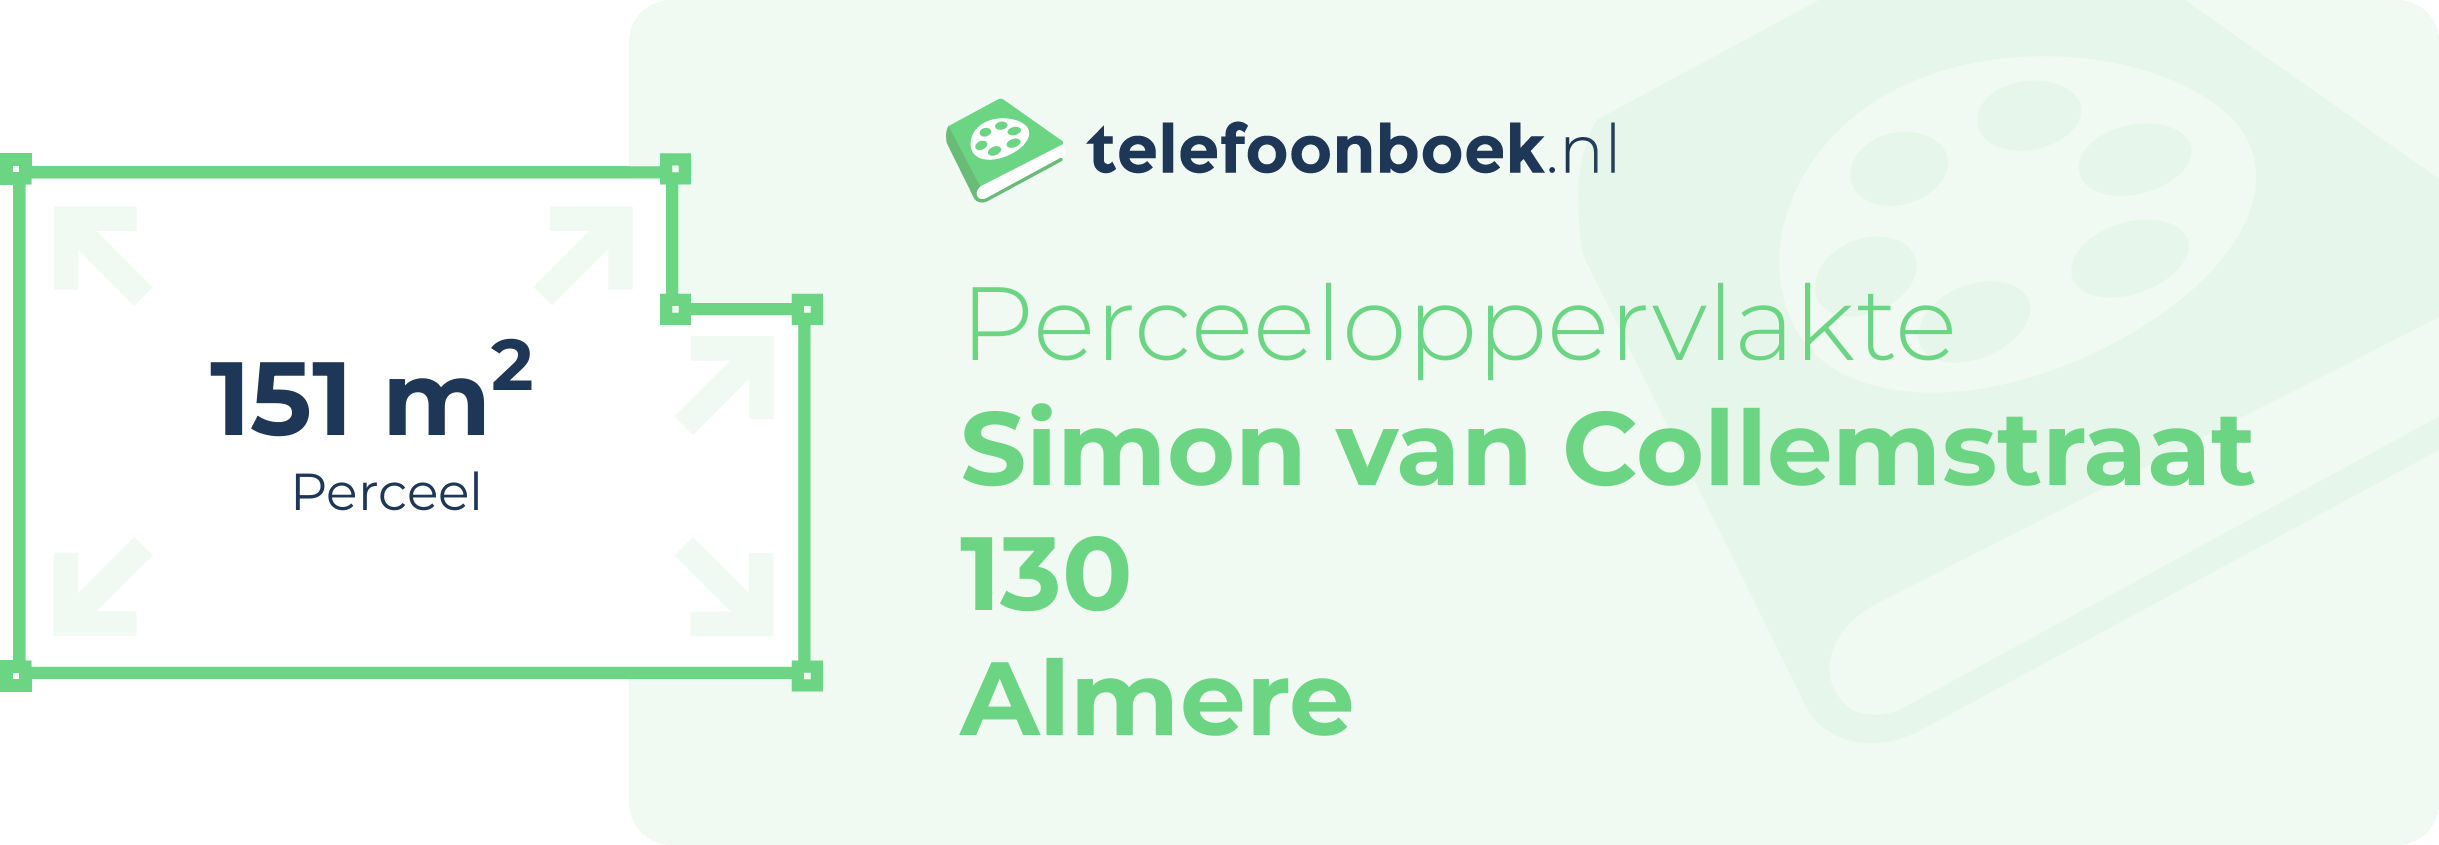 Perceeloppervlakte Simon Van Collemstraat 130 Almere